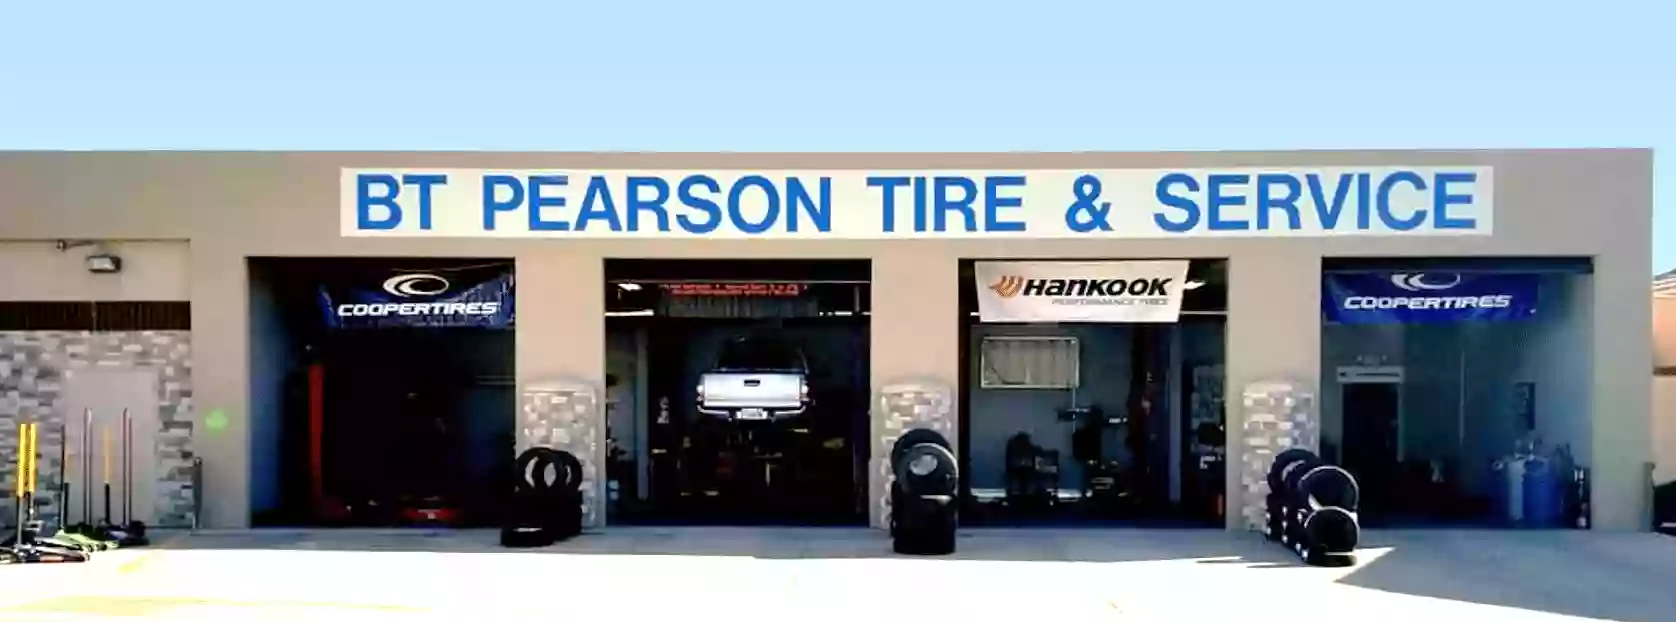 BT Pearson Tires & Service